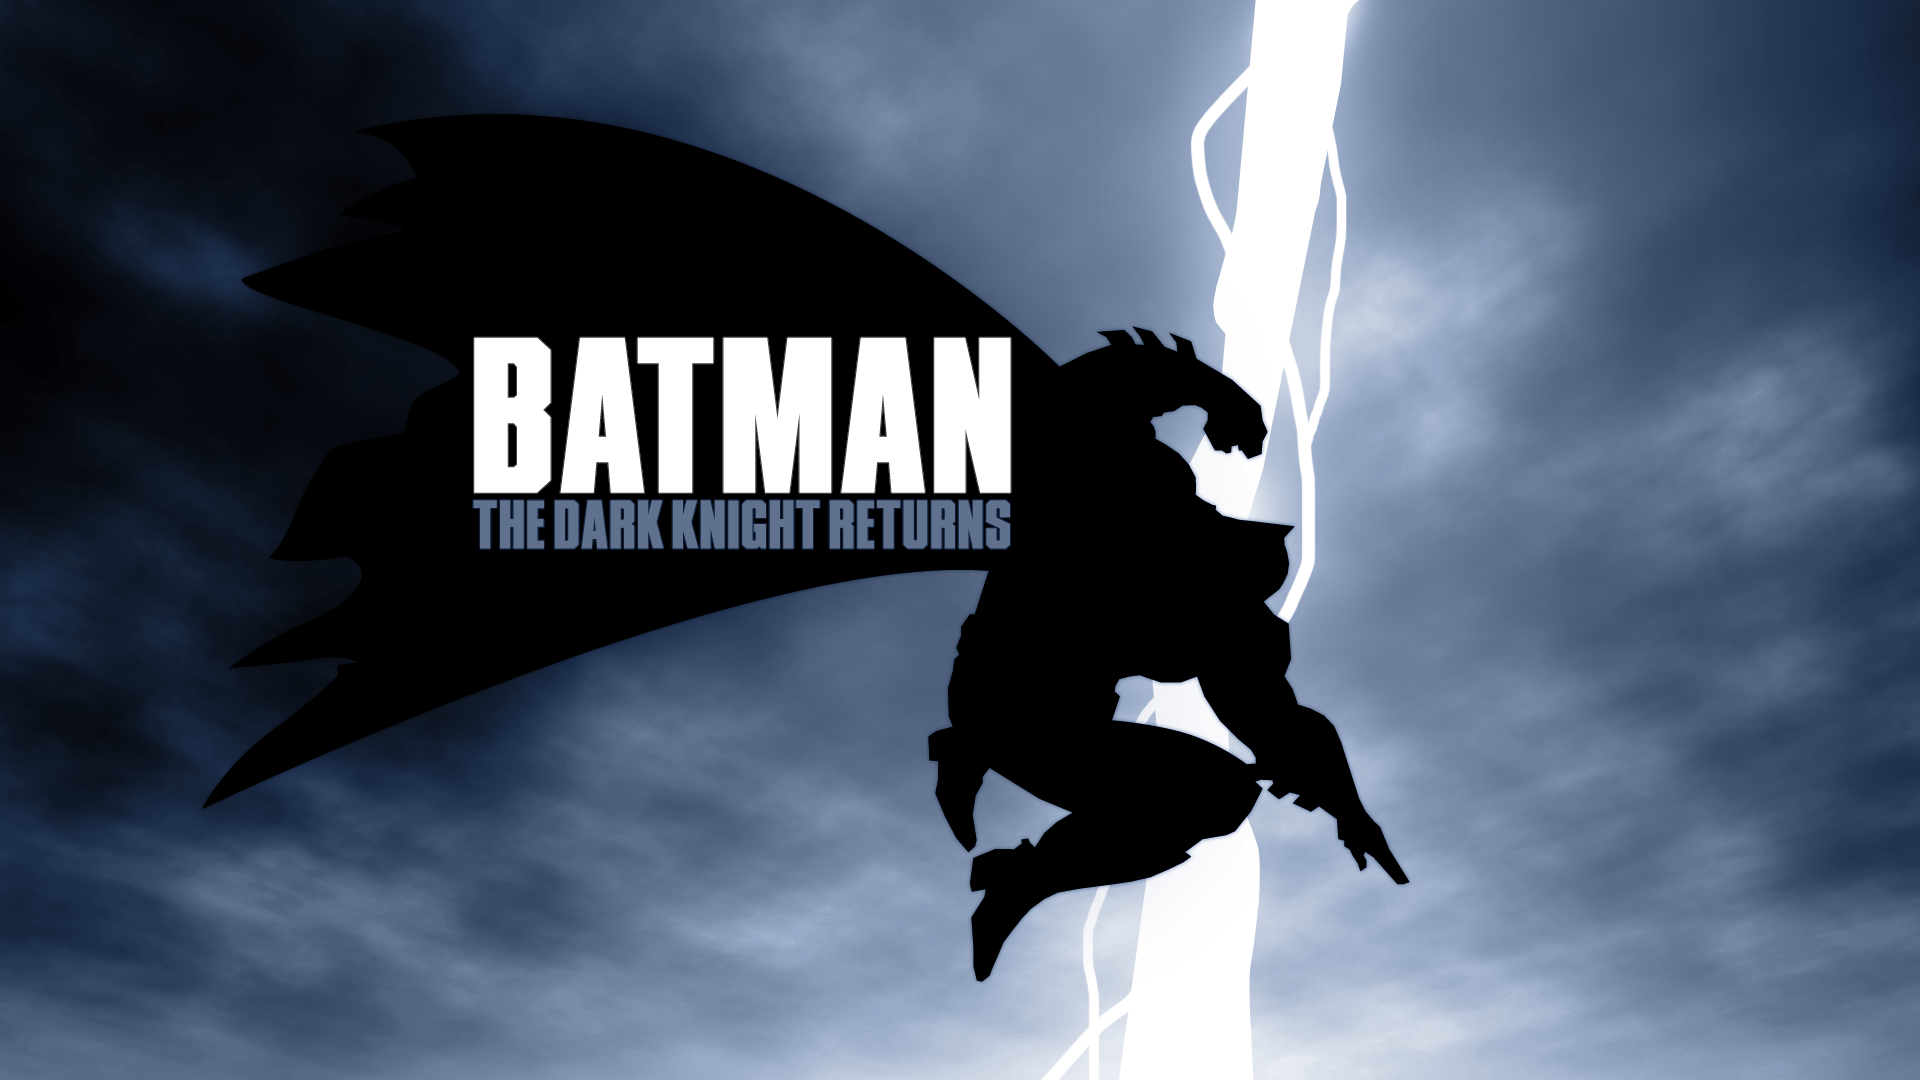 Batman: The Dark Knight Returns Wallpaper. DC comics